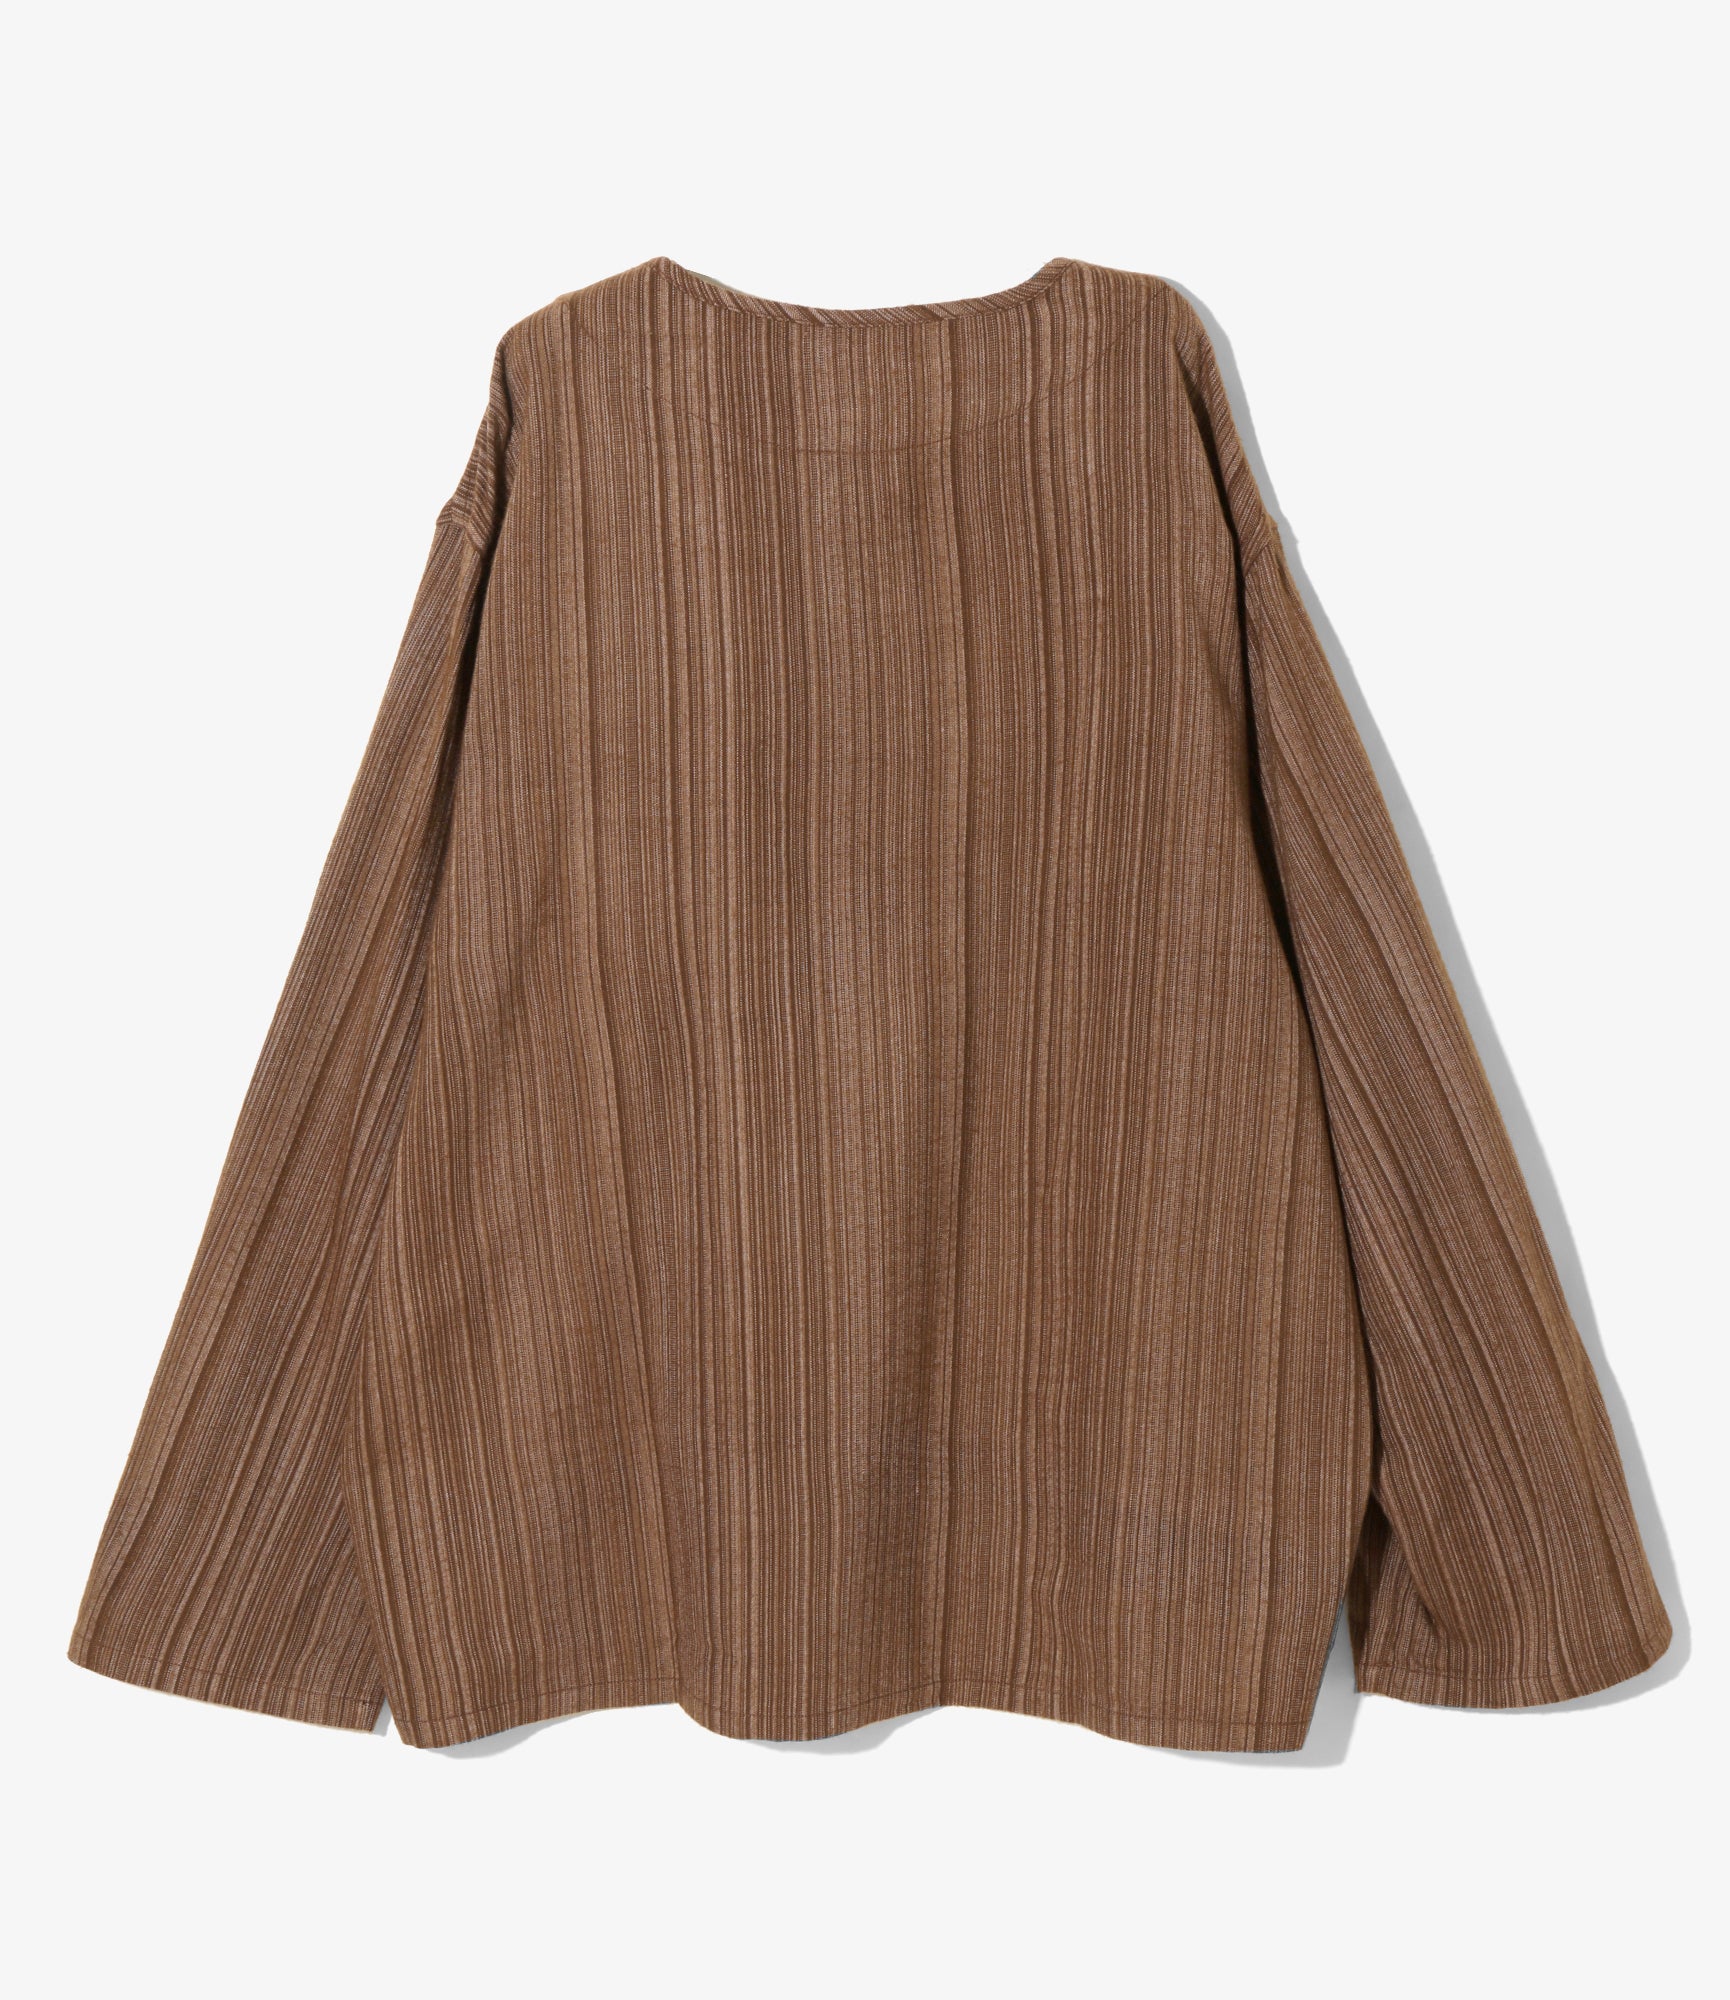 Henry Neck Shirt - Brown - Acrylic Ikat Stripe